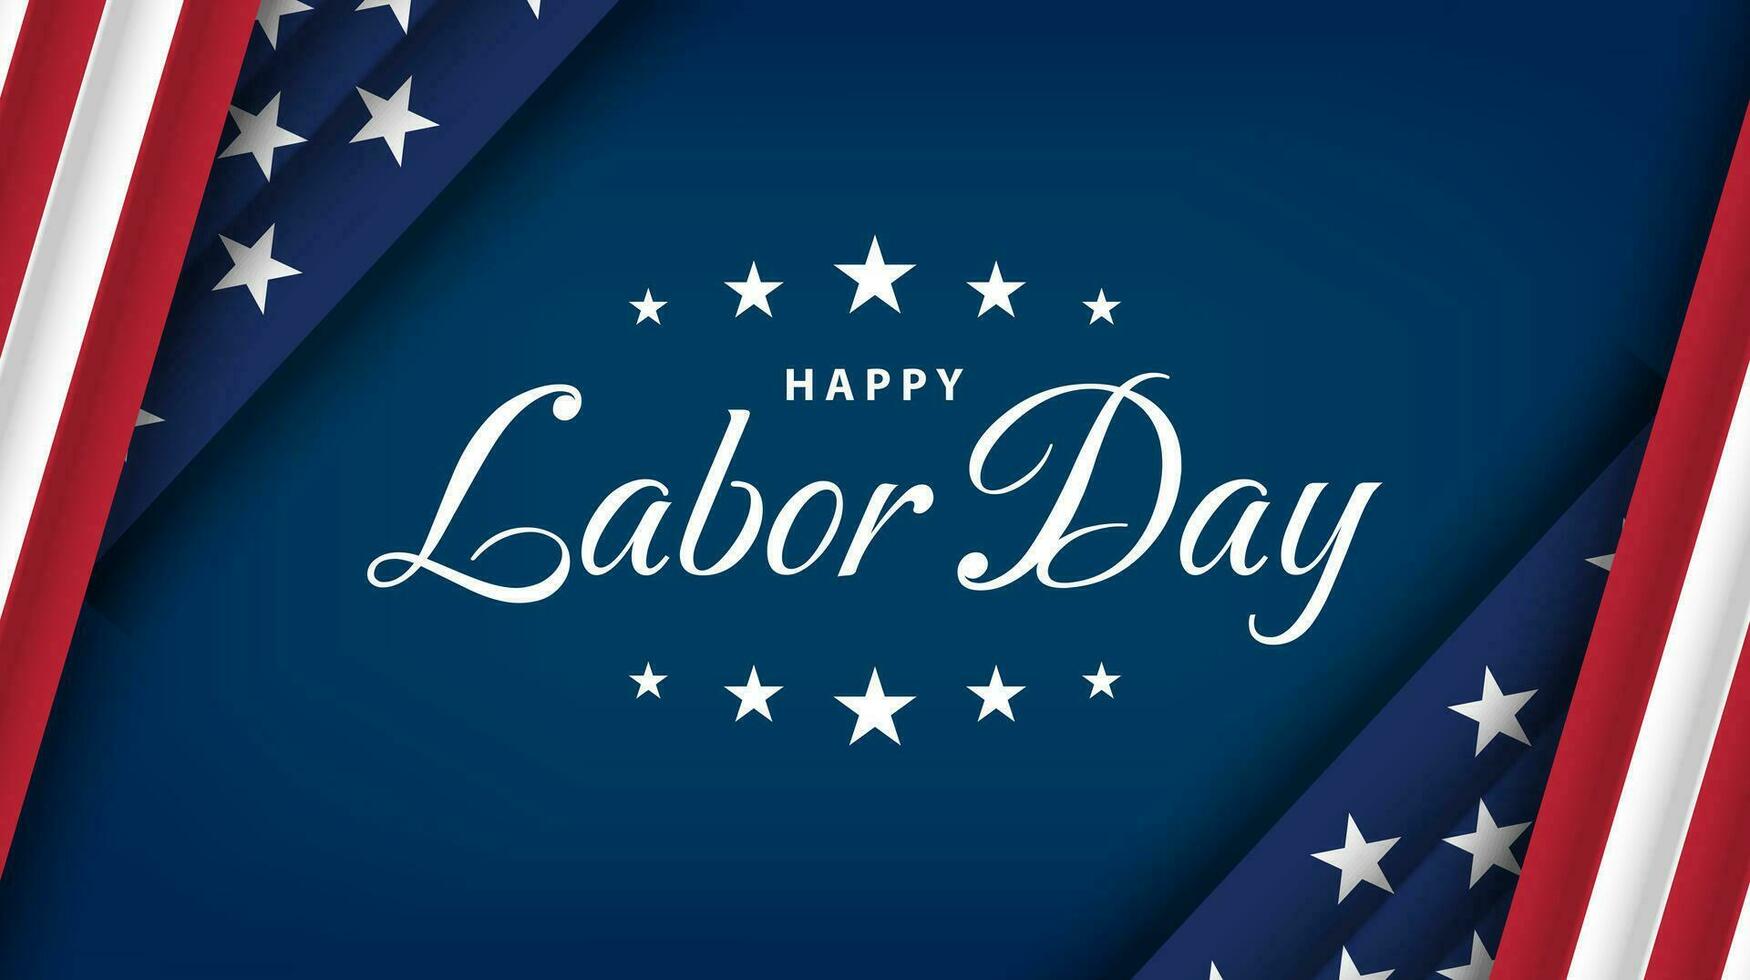 USA labor day celebration background template. United states national holiday banner design. Vector illustration